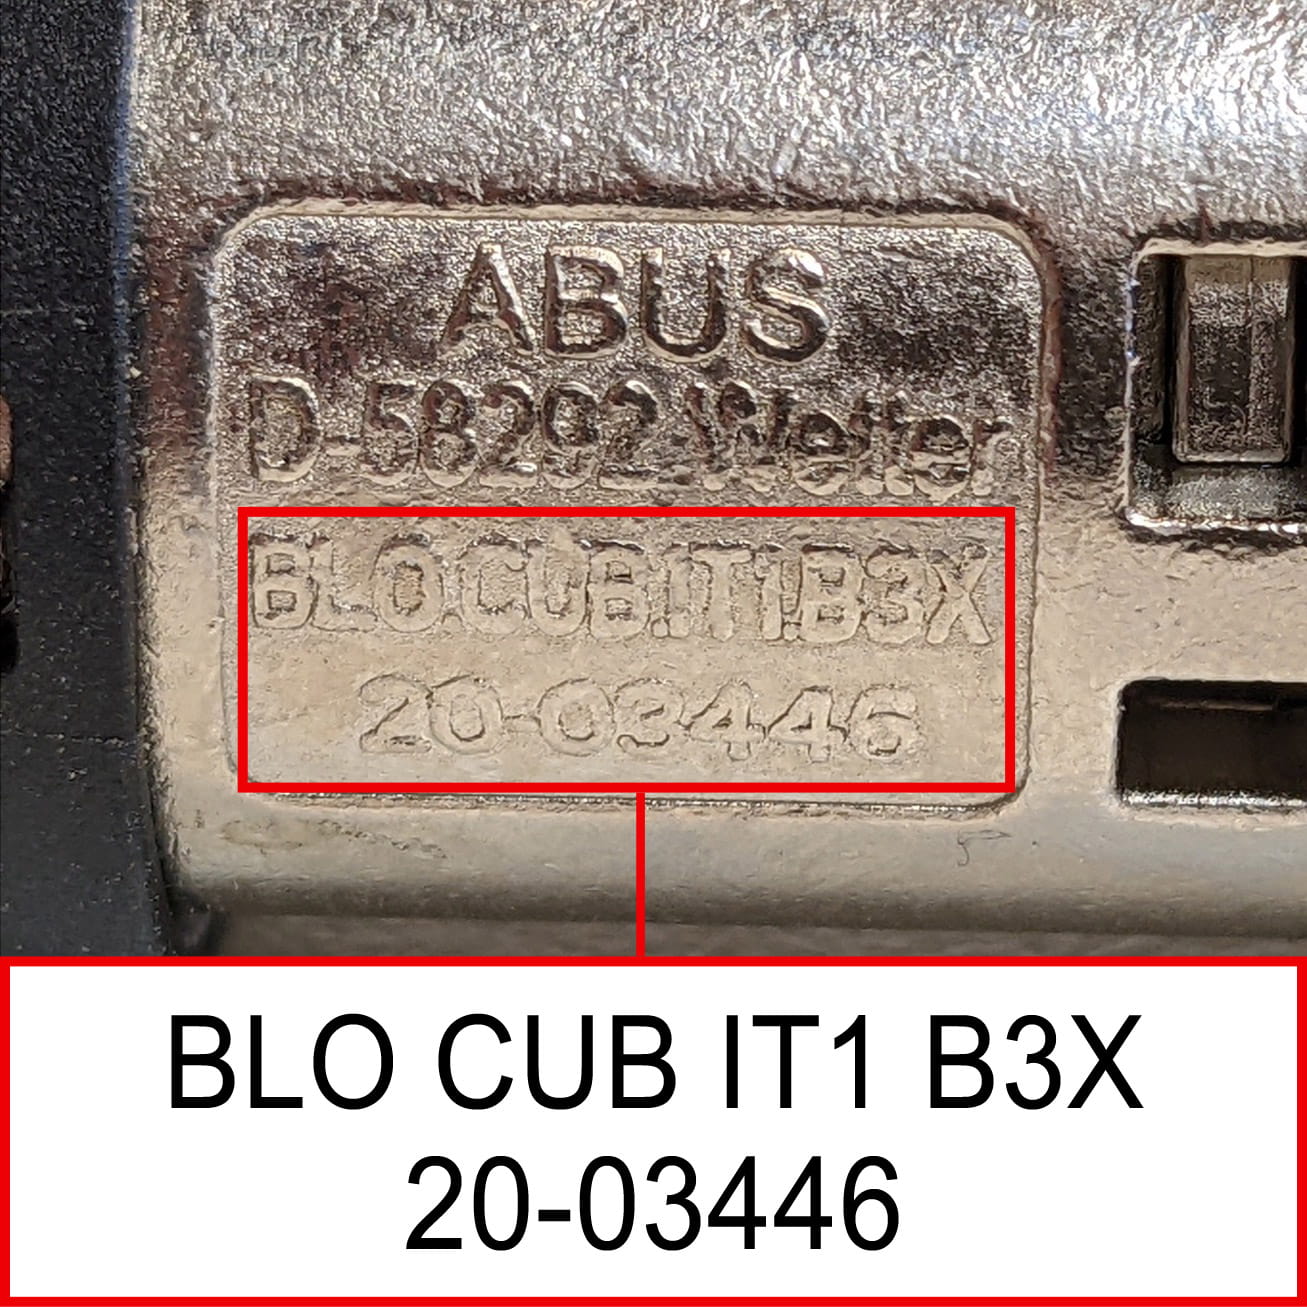 ABUS Cube InTube Battery Lock BLO CUB IT1 B3X XPlus (20-03446)